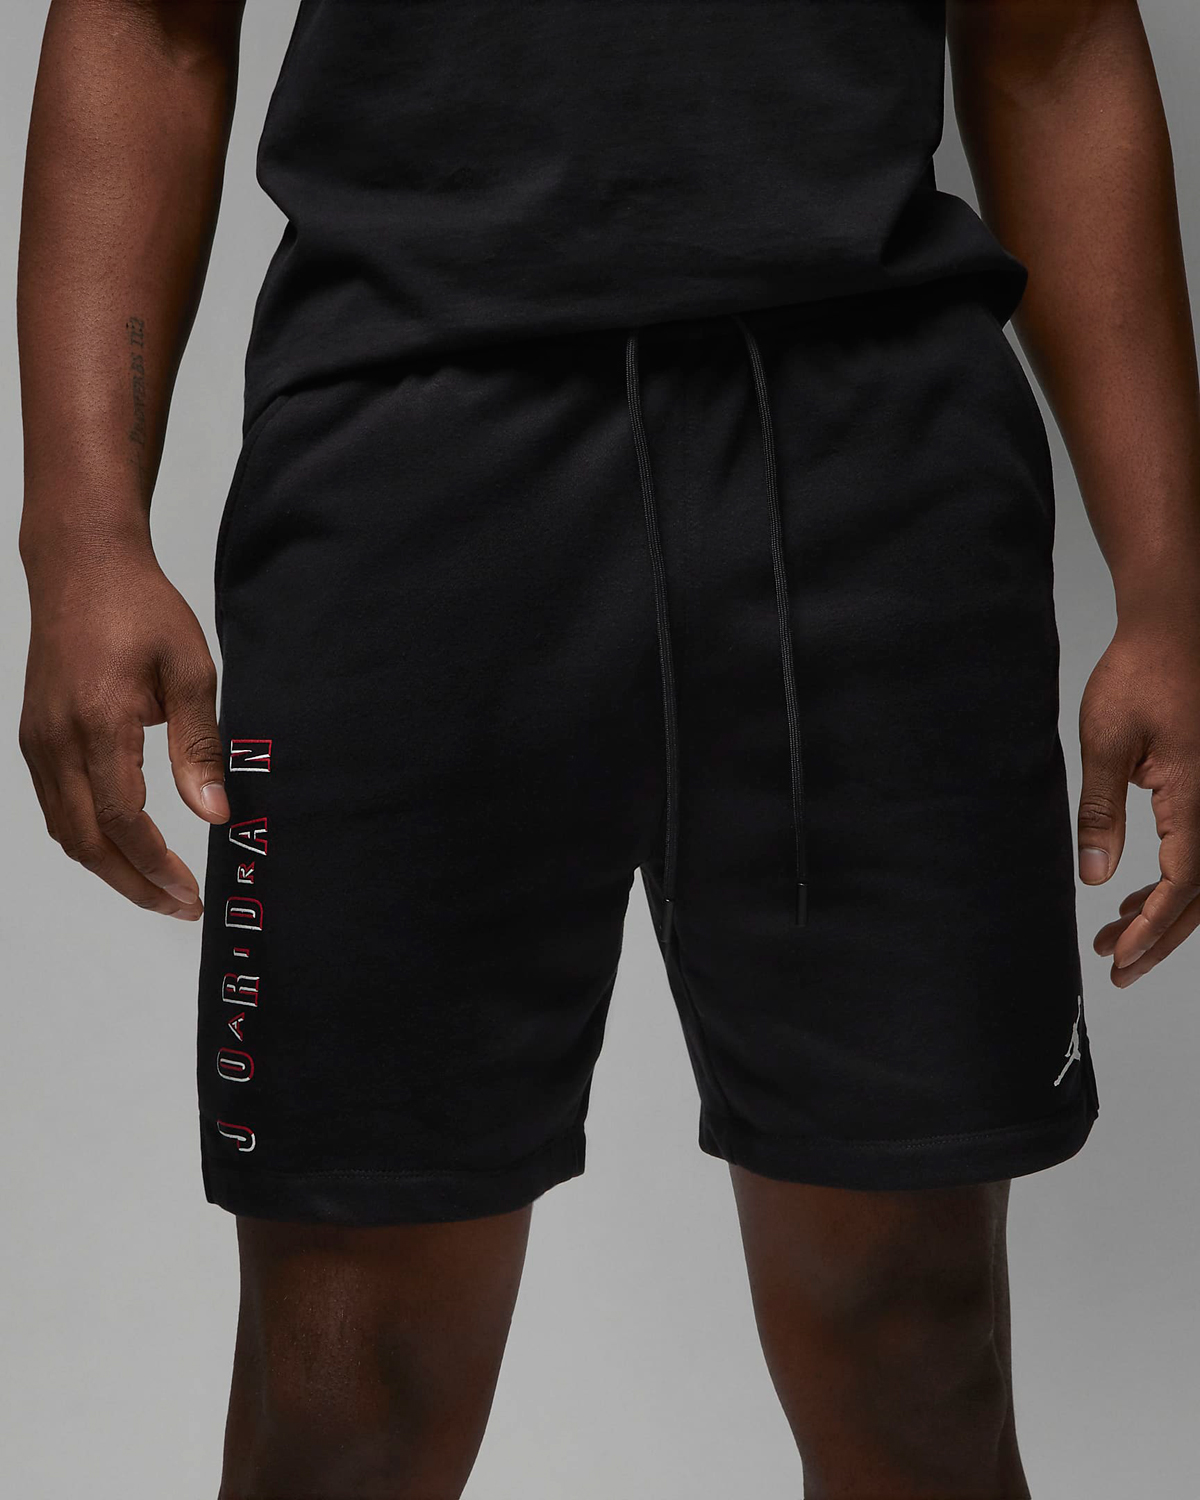 Jordan-Essentials-Shorts-Black-White-Red-1